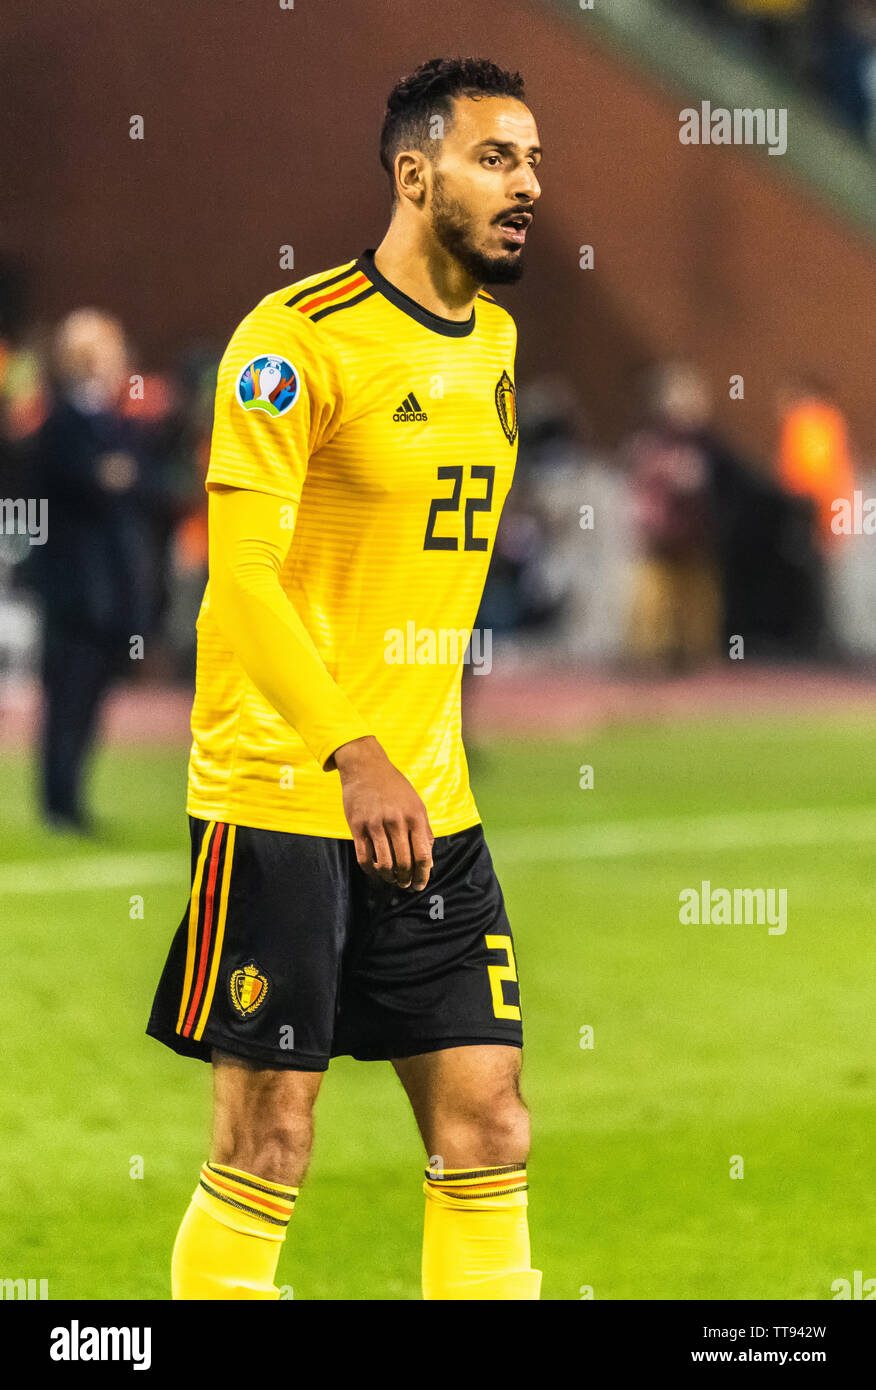 Brussels, Belgium - March 21, 2019. Belgium national team winger Nacer Chadli during UEFA Euro 2020 qualification match Belgium vs Russia in Brussels. Stock Photo